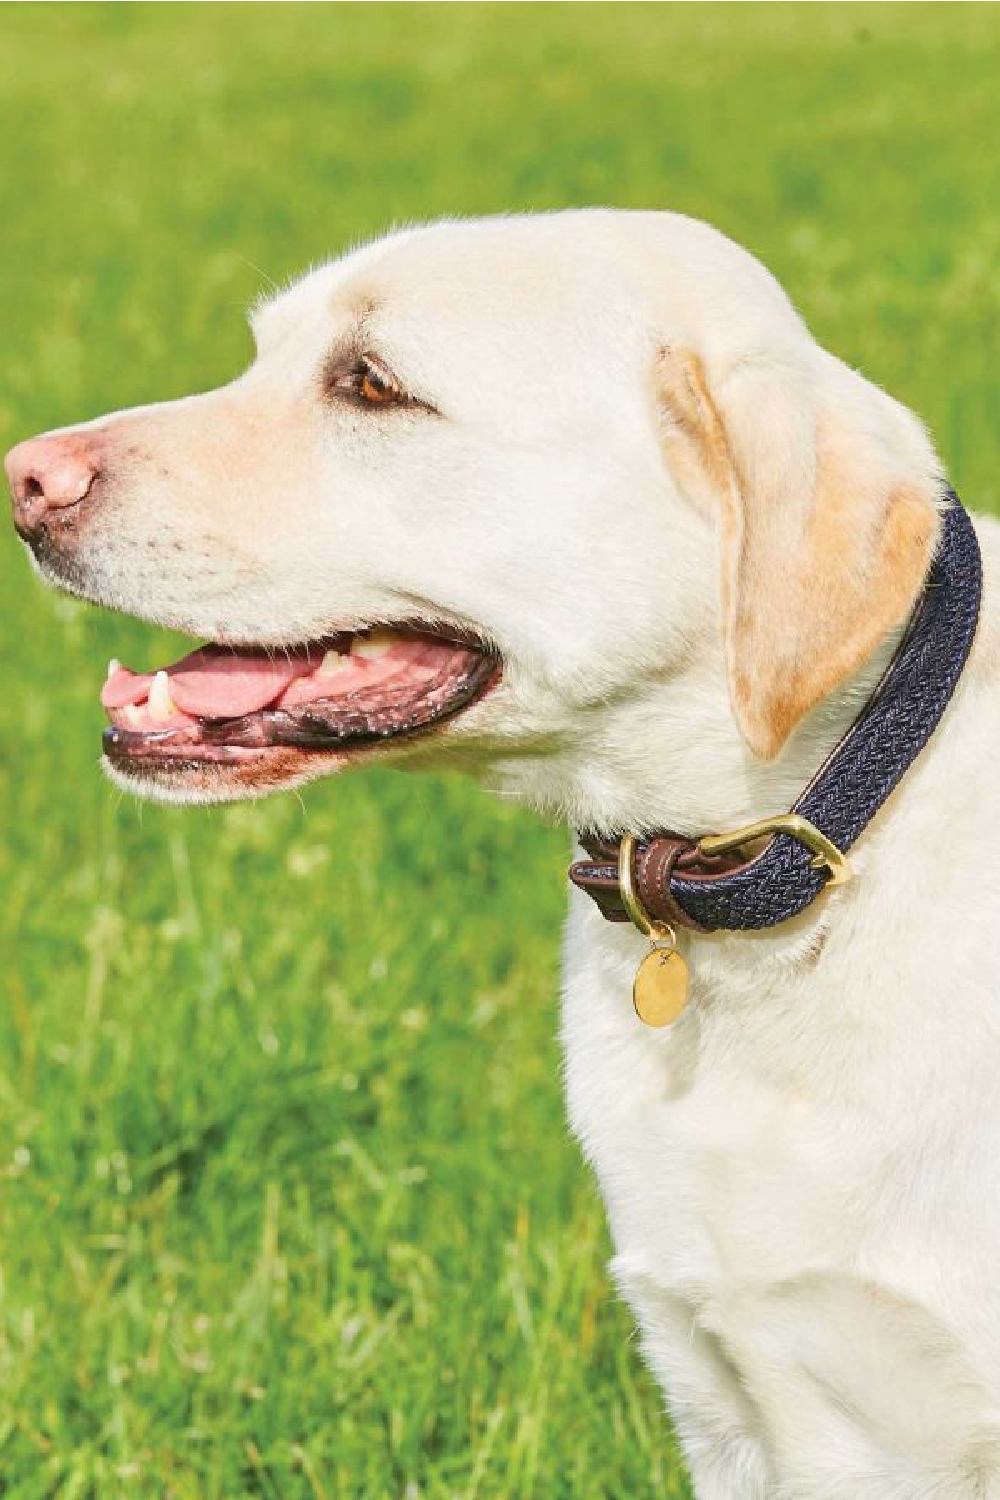 WeatherBeeta Plaited Dog Collar in Navy/Brown 